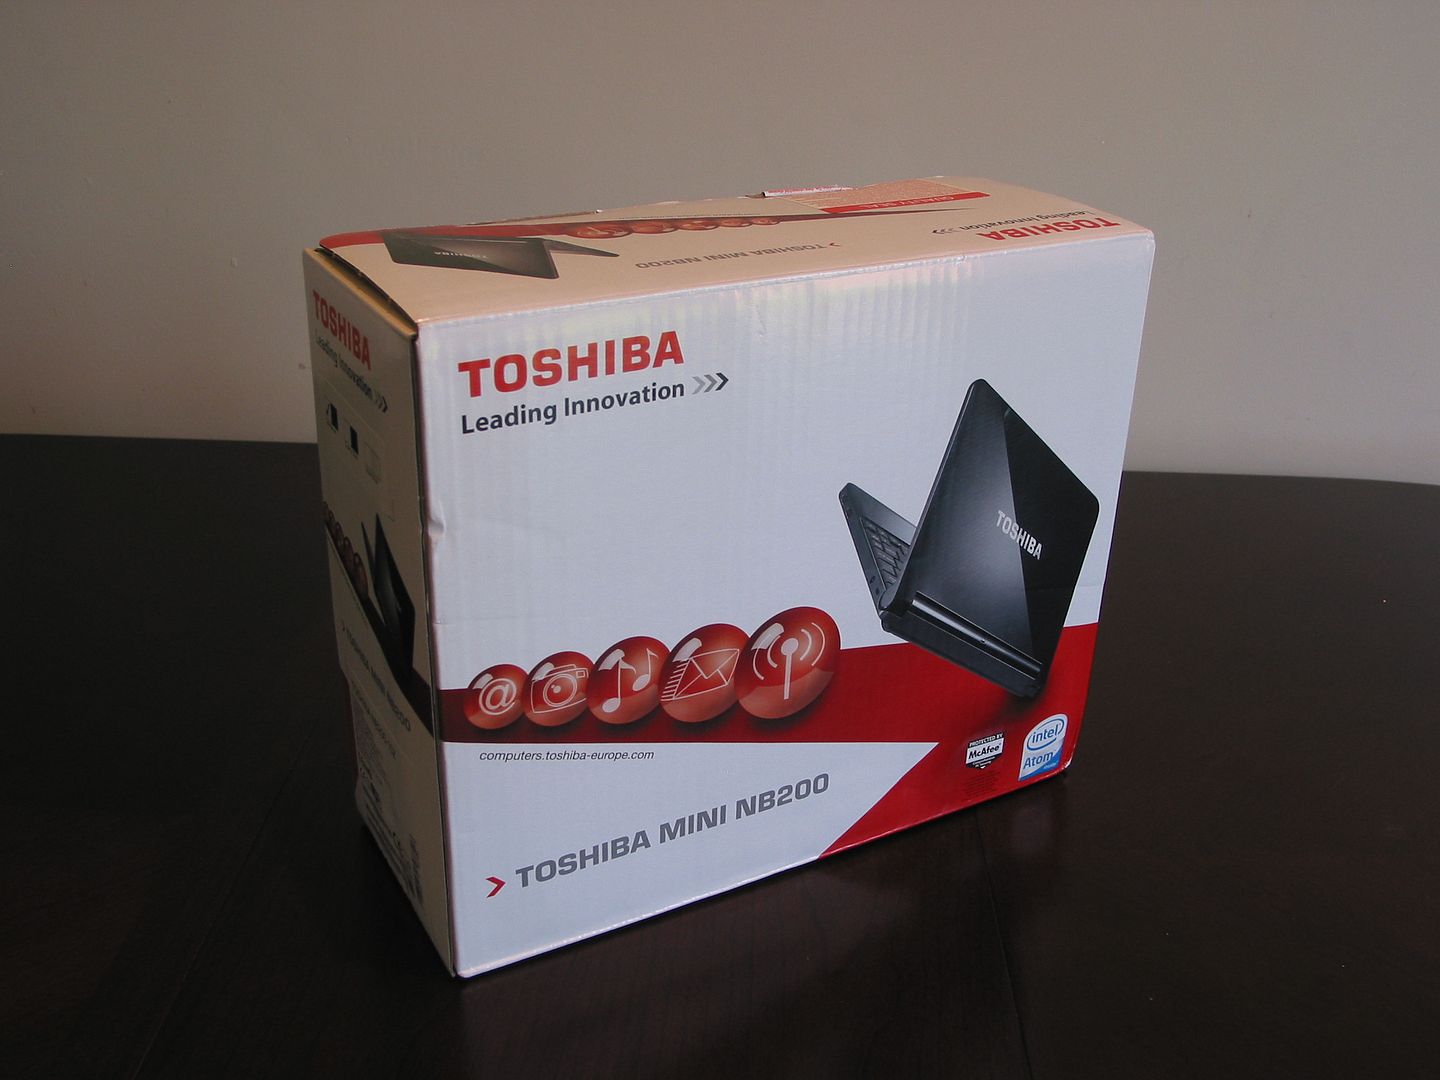 Toshiba NB200 Unboxed